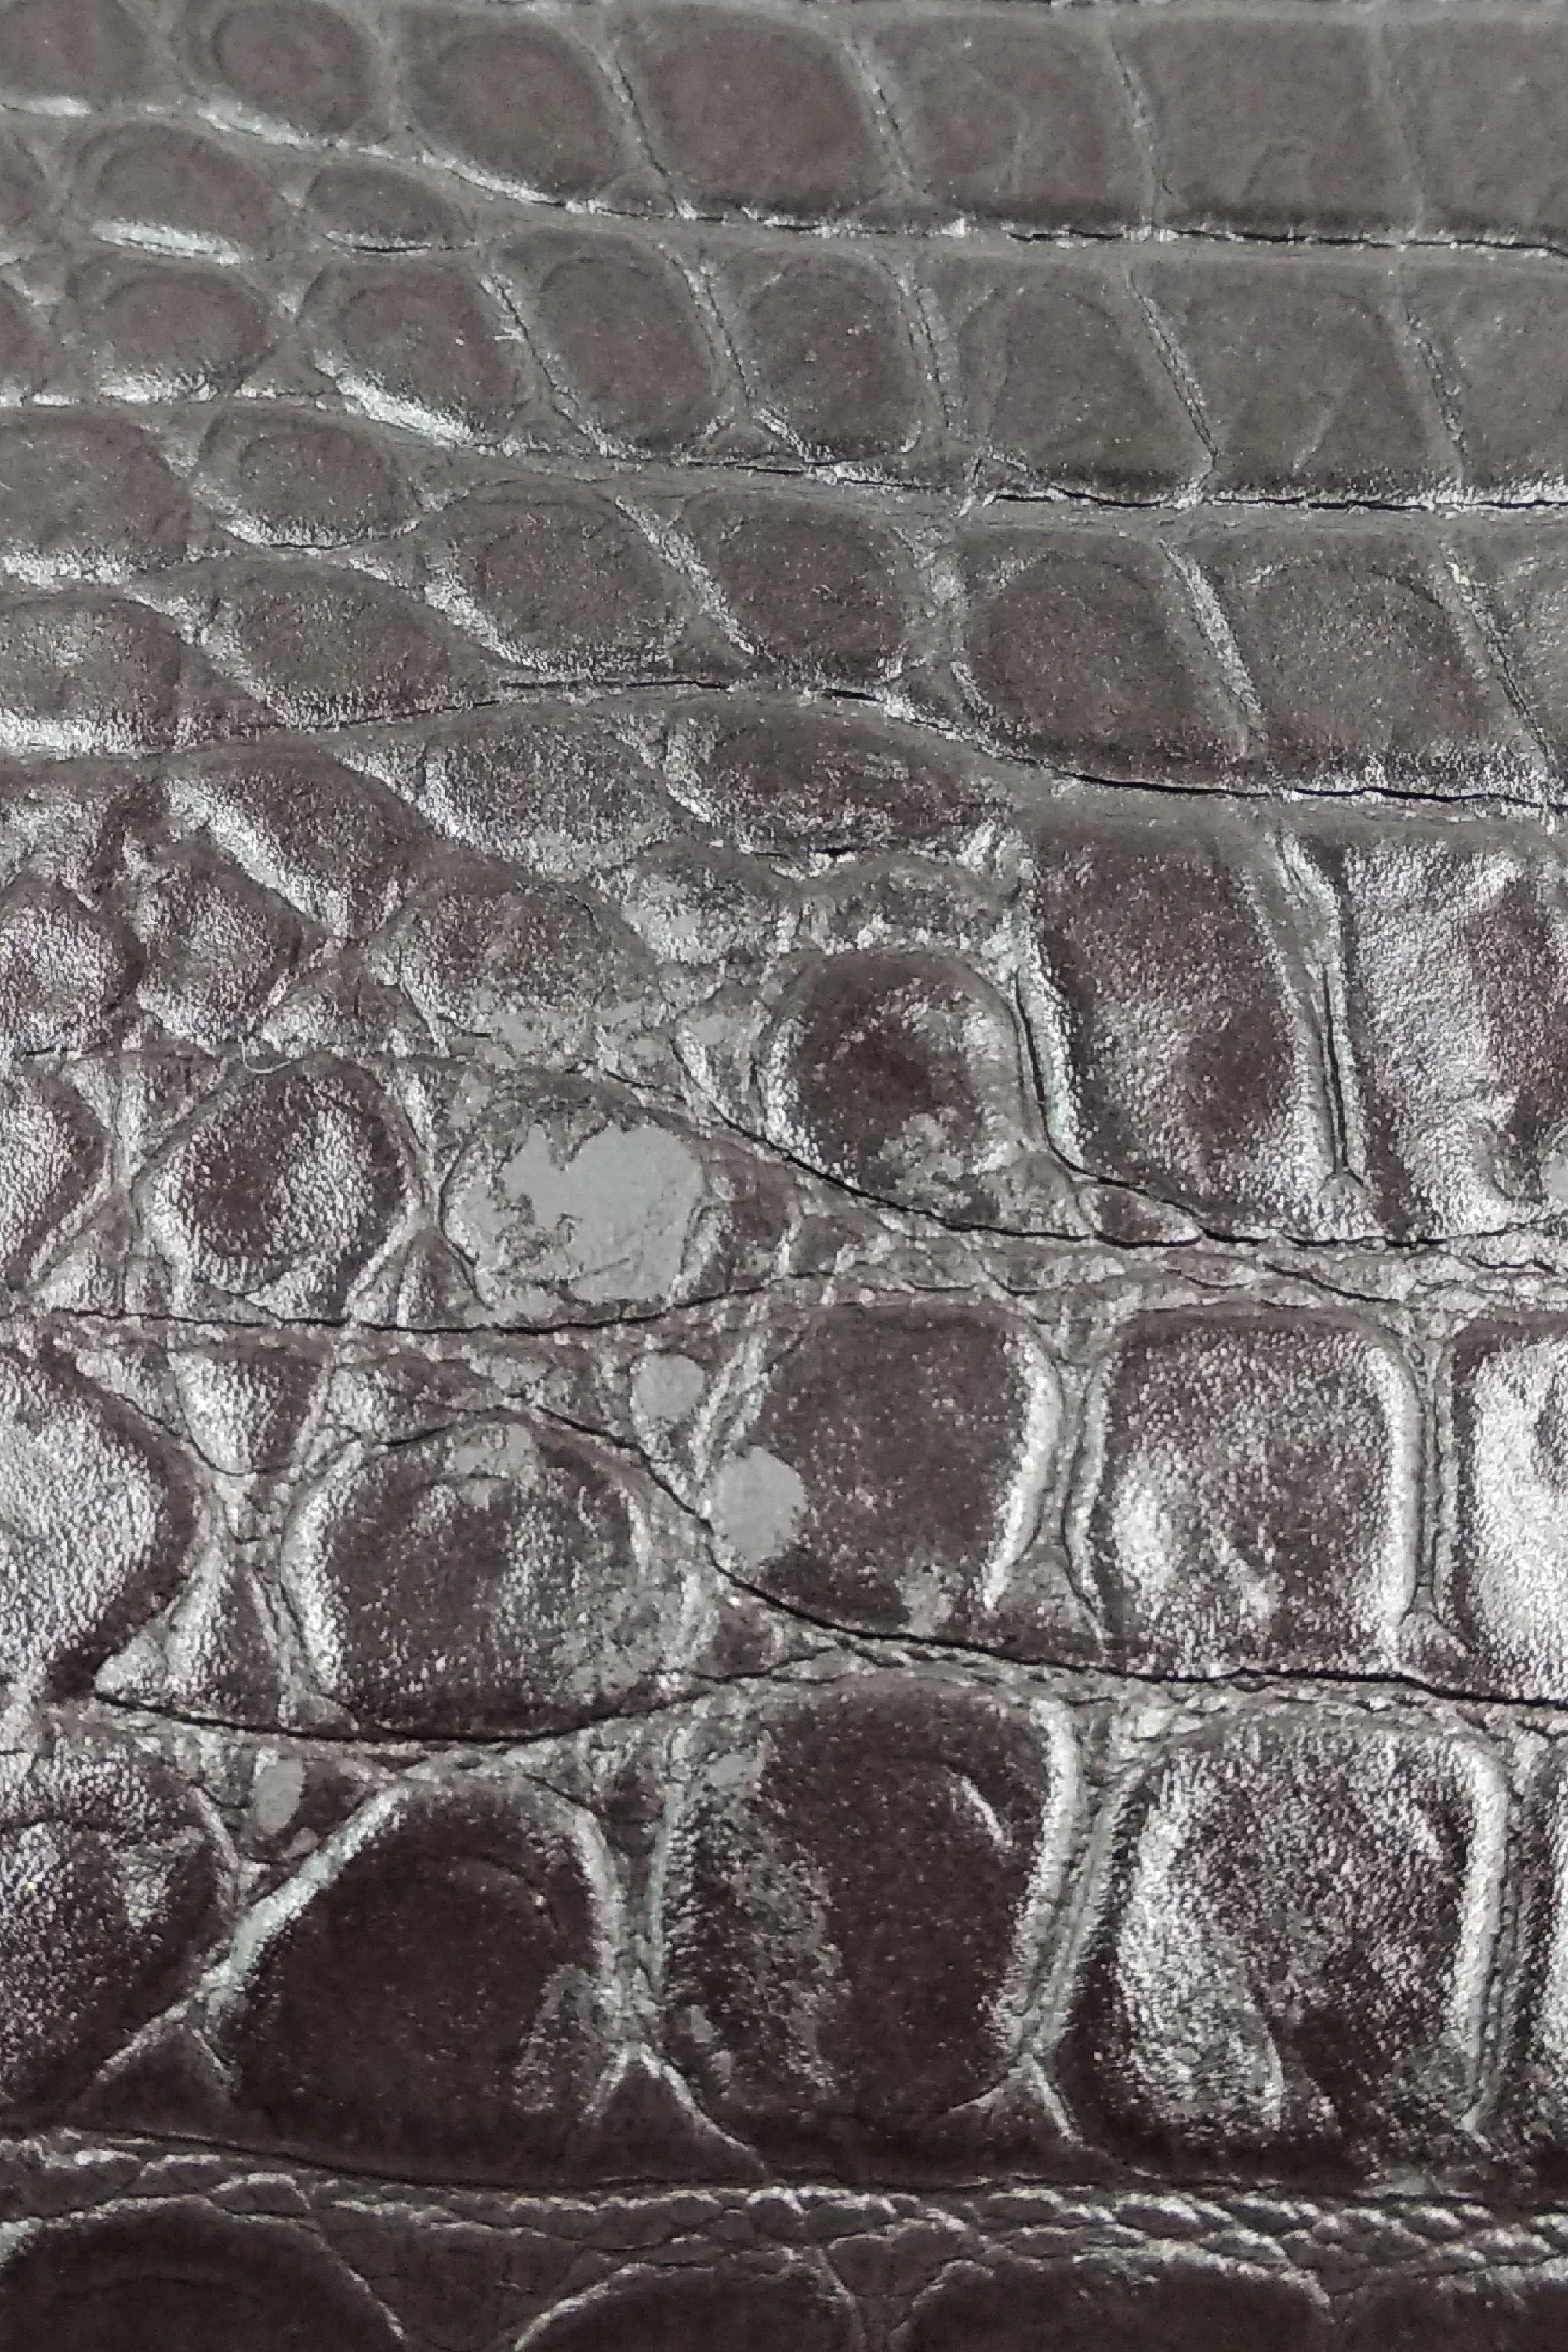 Saint Laurent Sac de Jour NM Bag Crocodile Embossed Leather Nano at 1stDibs